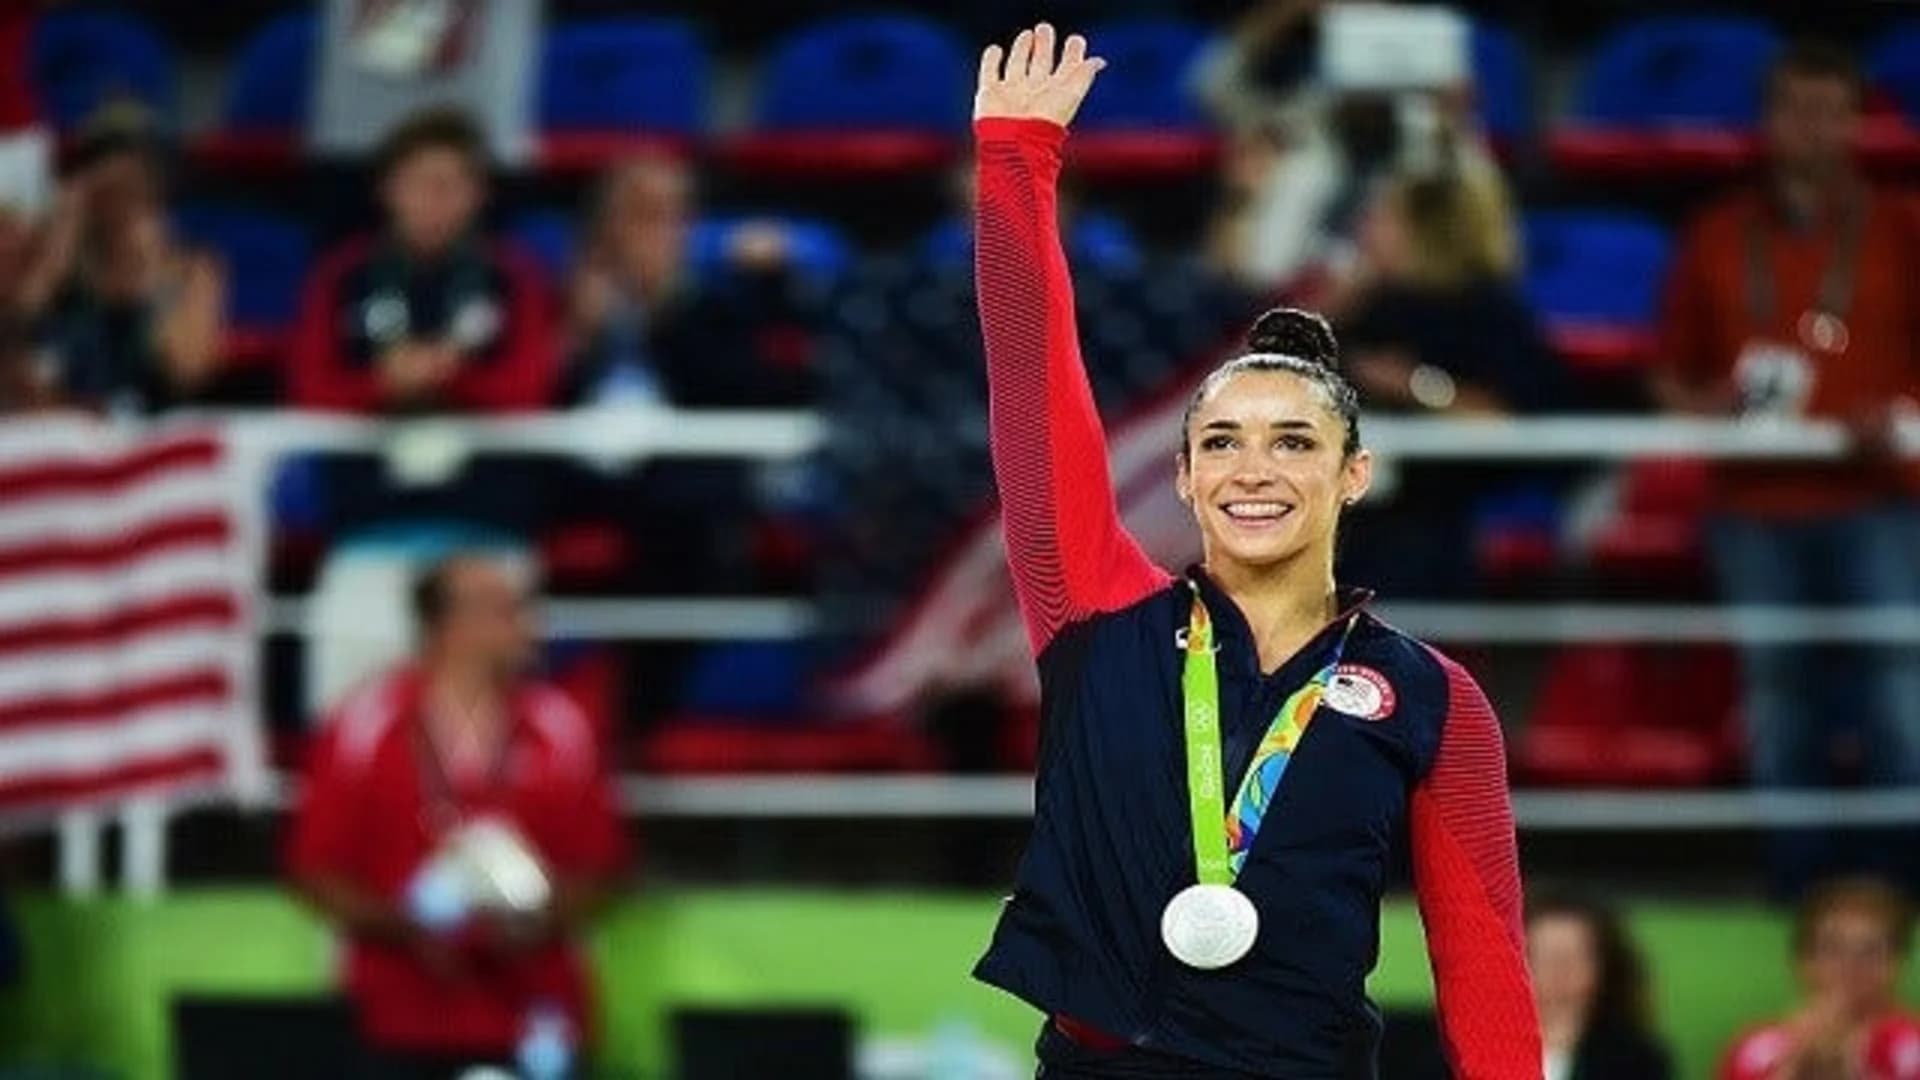 Olympic star Raisman files suit against USOC, USA Gymnastics